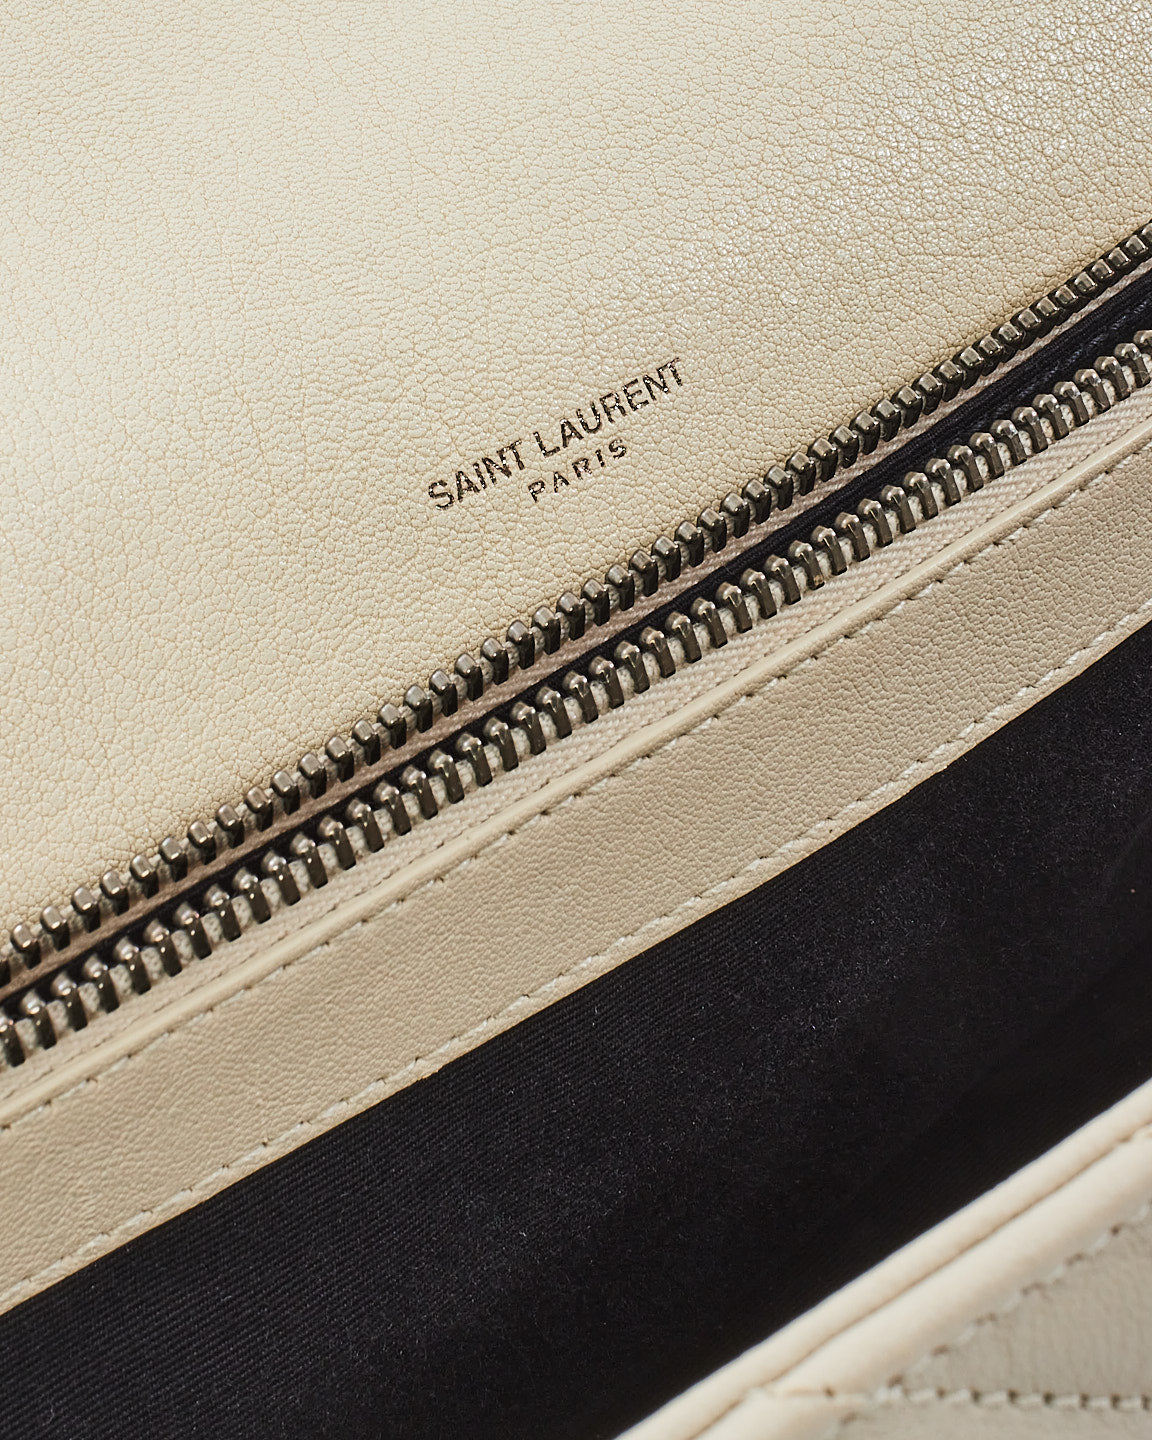 Saint Laurent Off White Leather Large College Bag